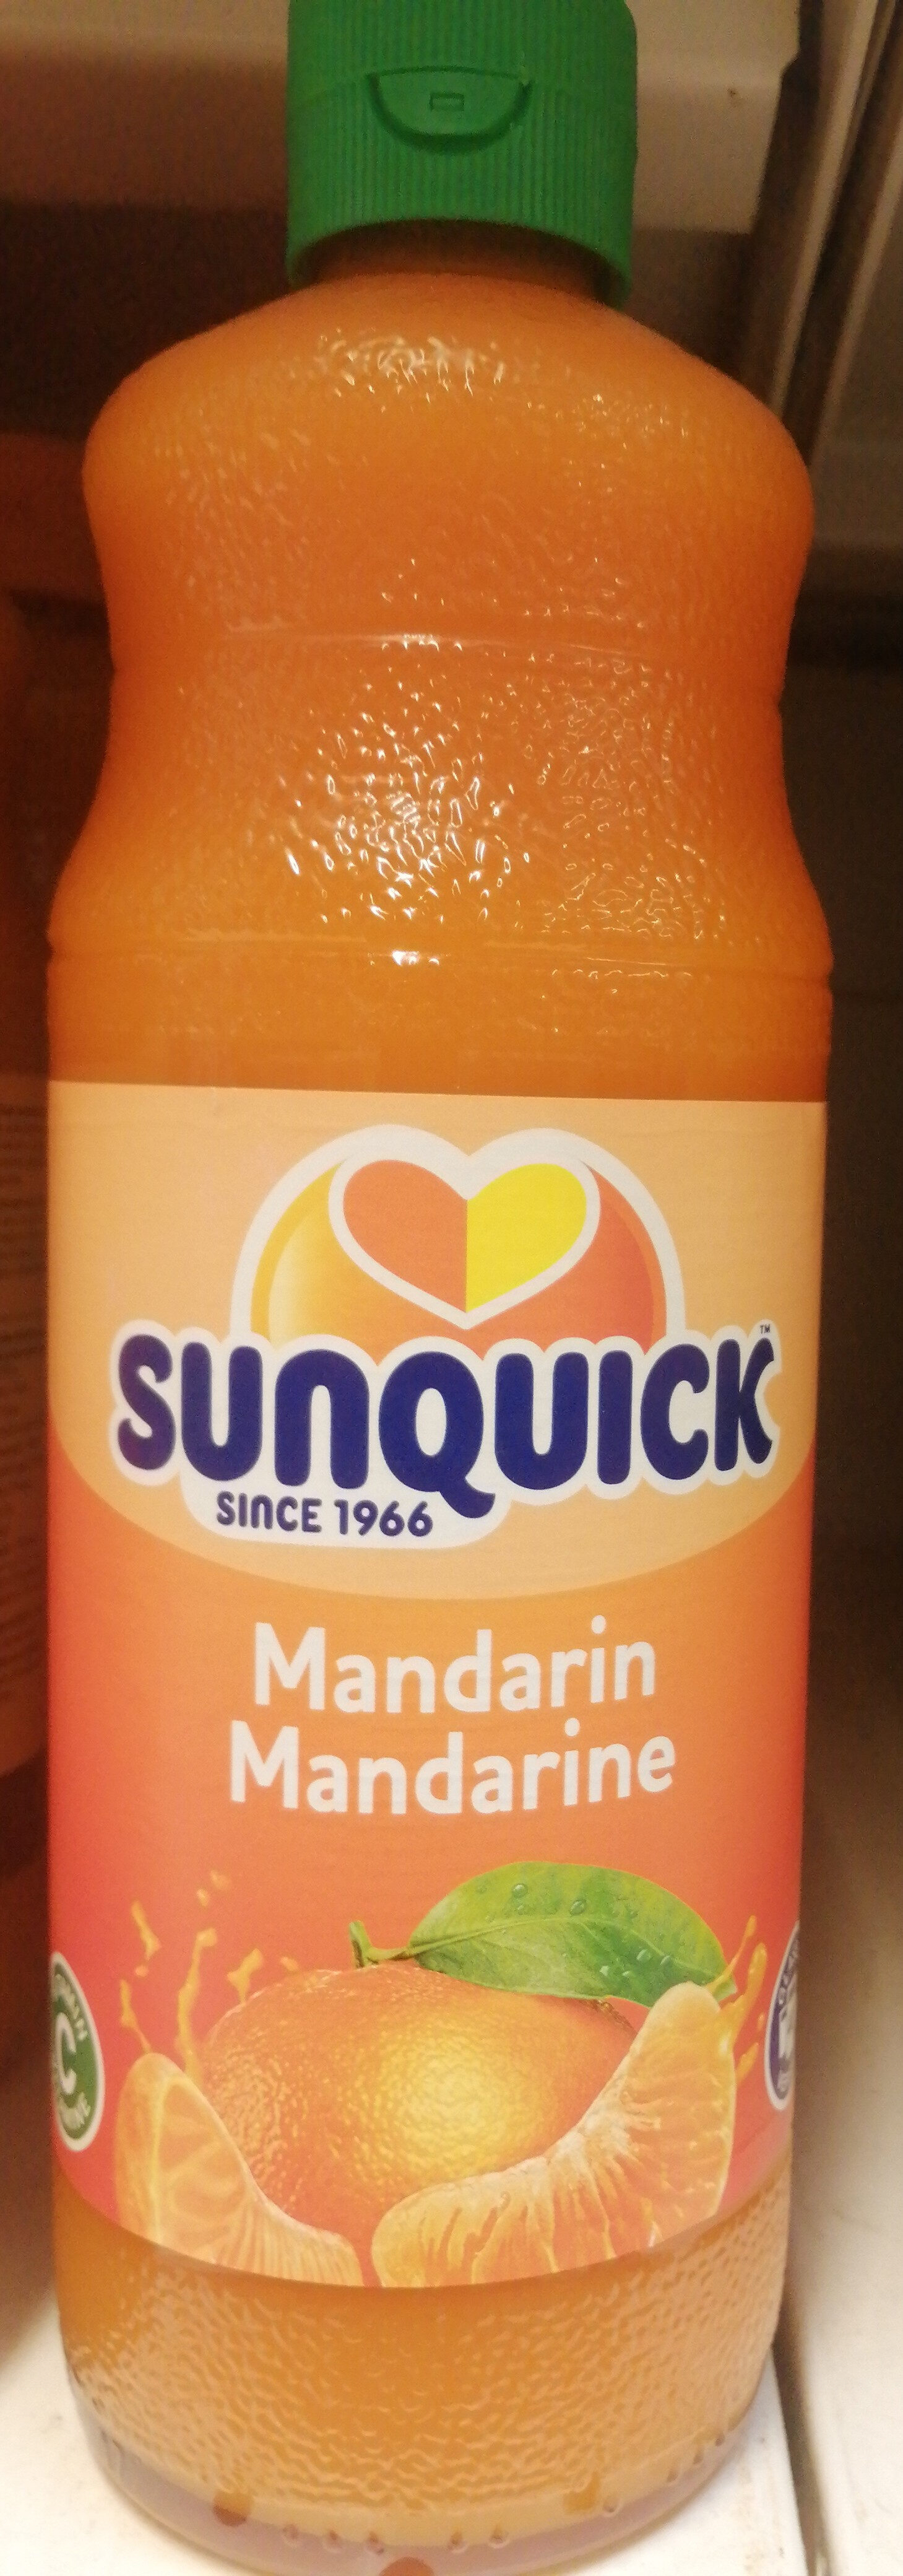 Sunquick - Produit